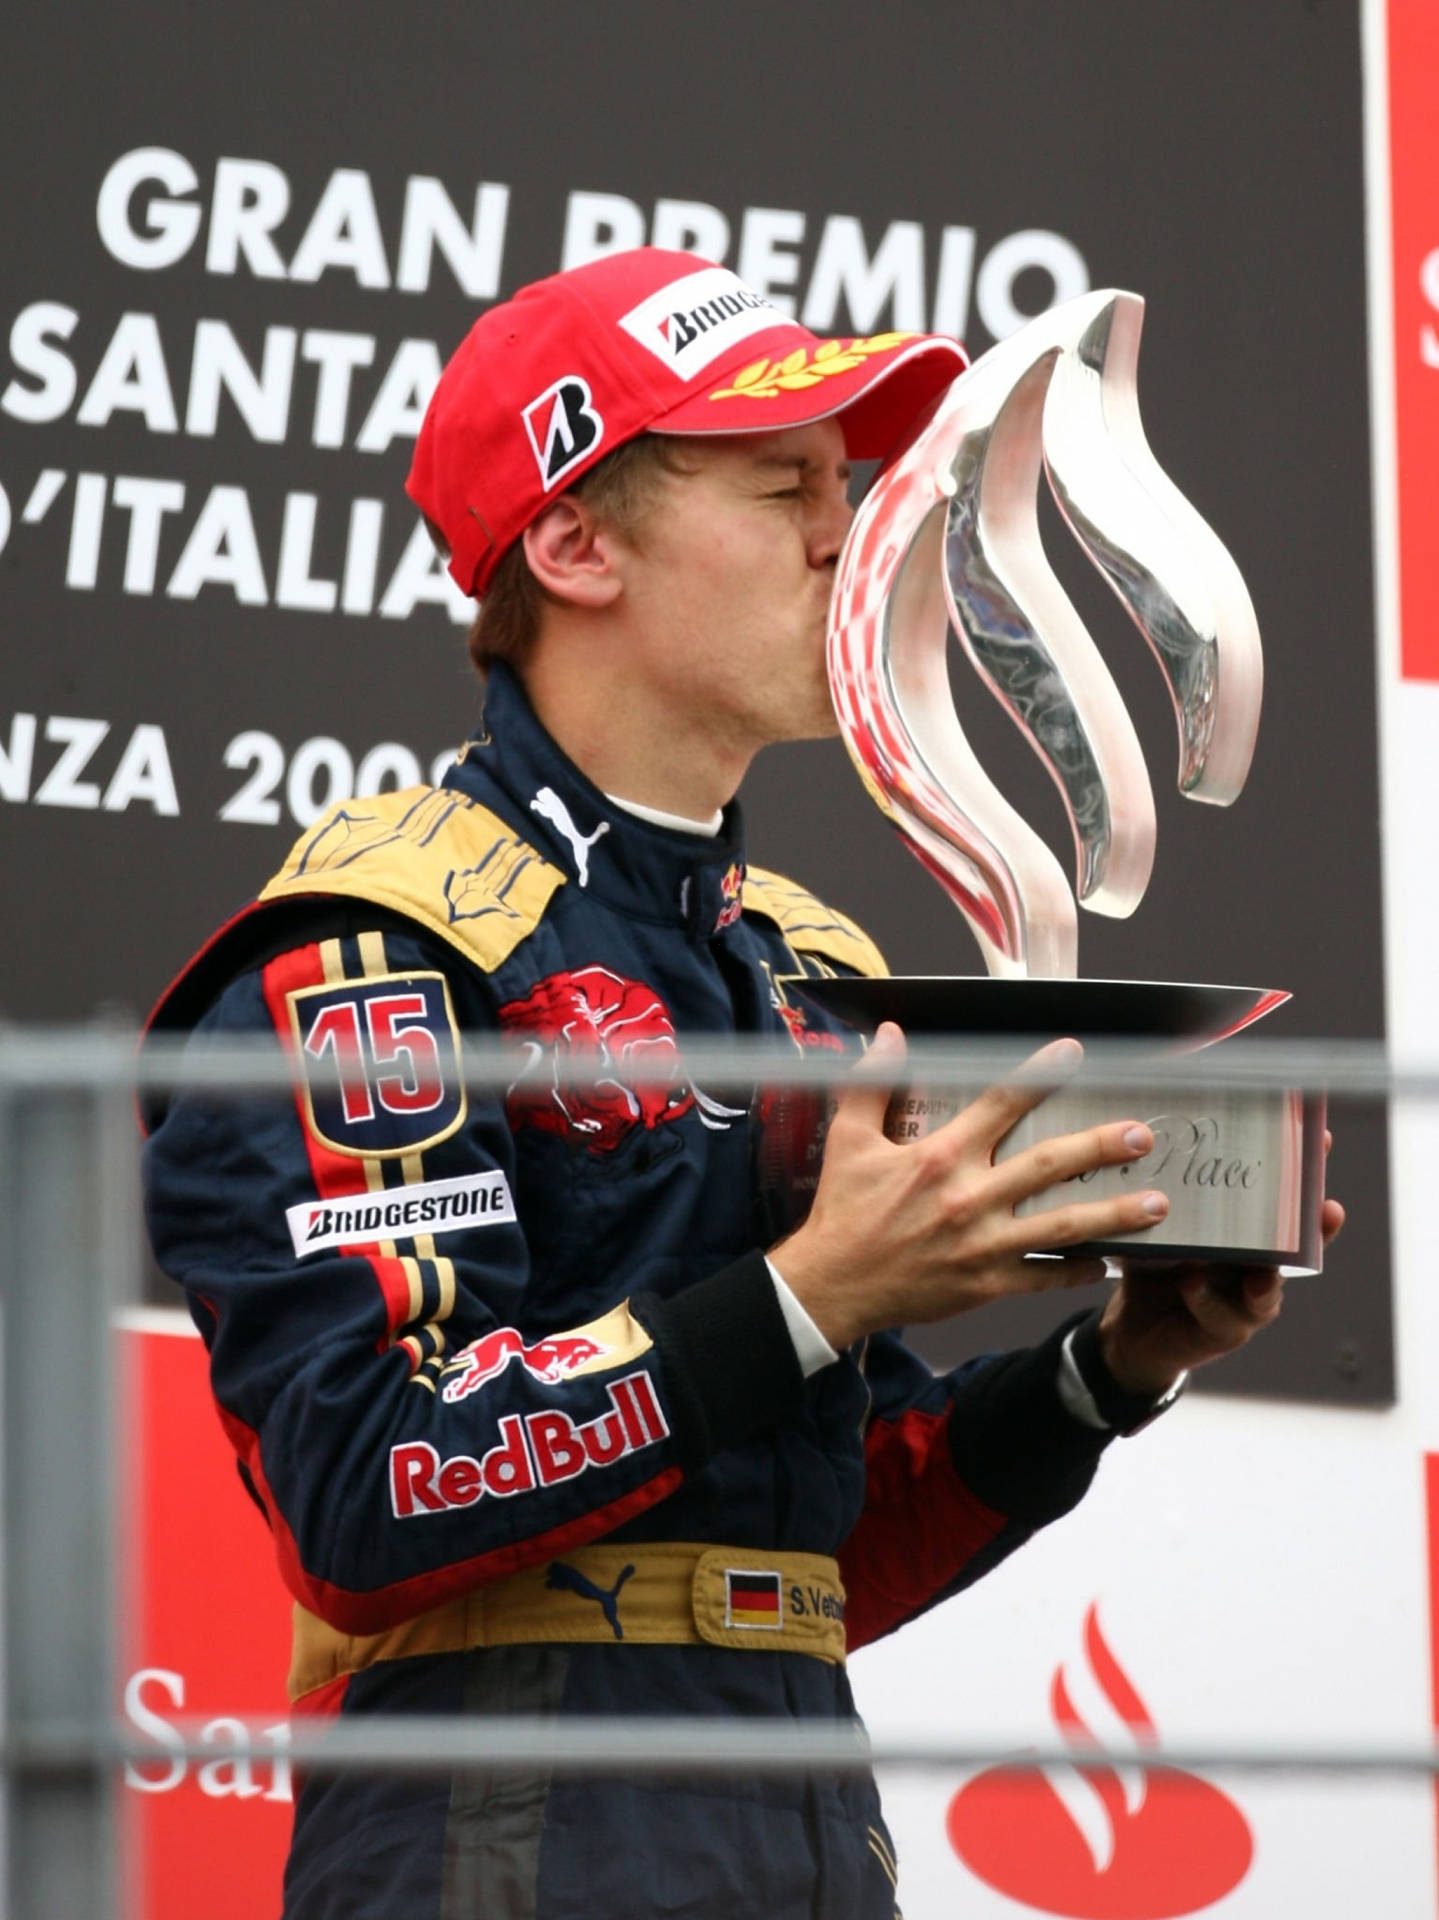 Caption: Celebrated F1 Racer, Sebastian Vettel, Kissing His Coveted Trophy Background